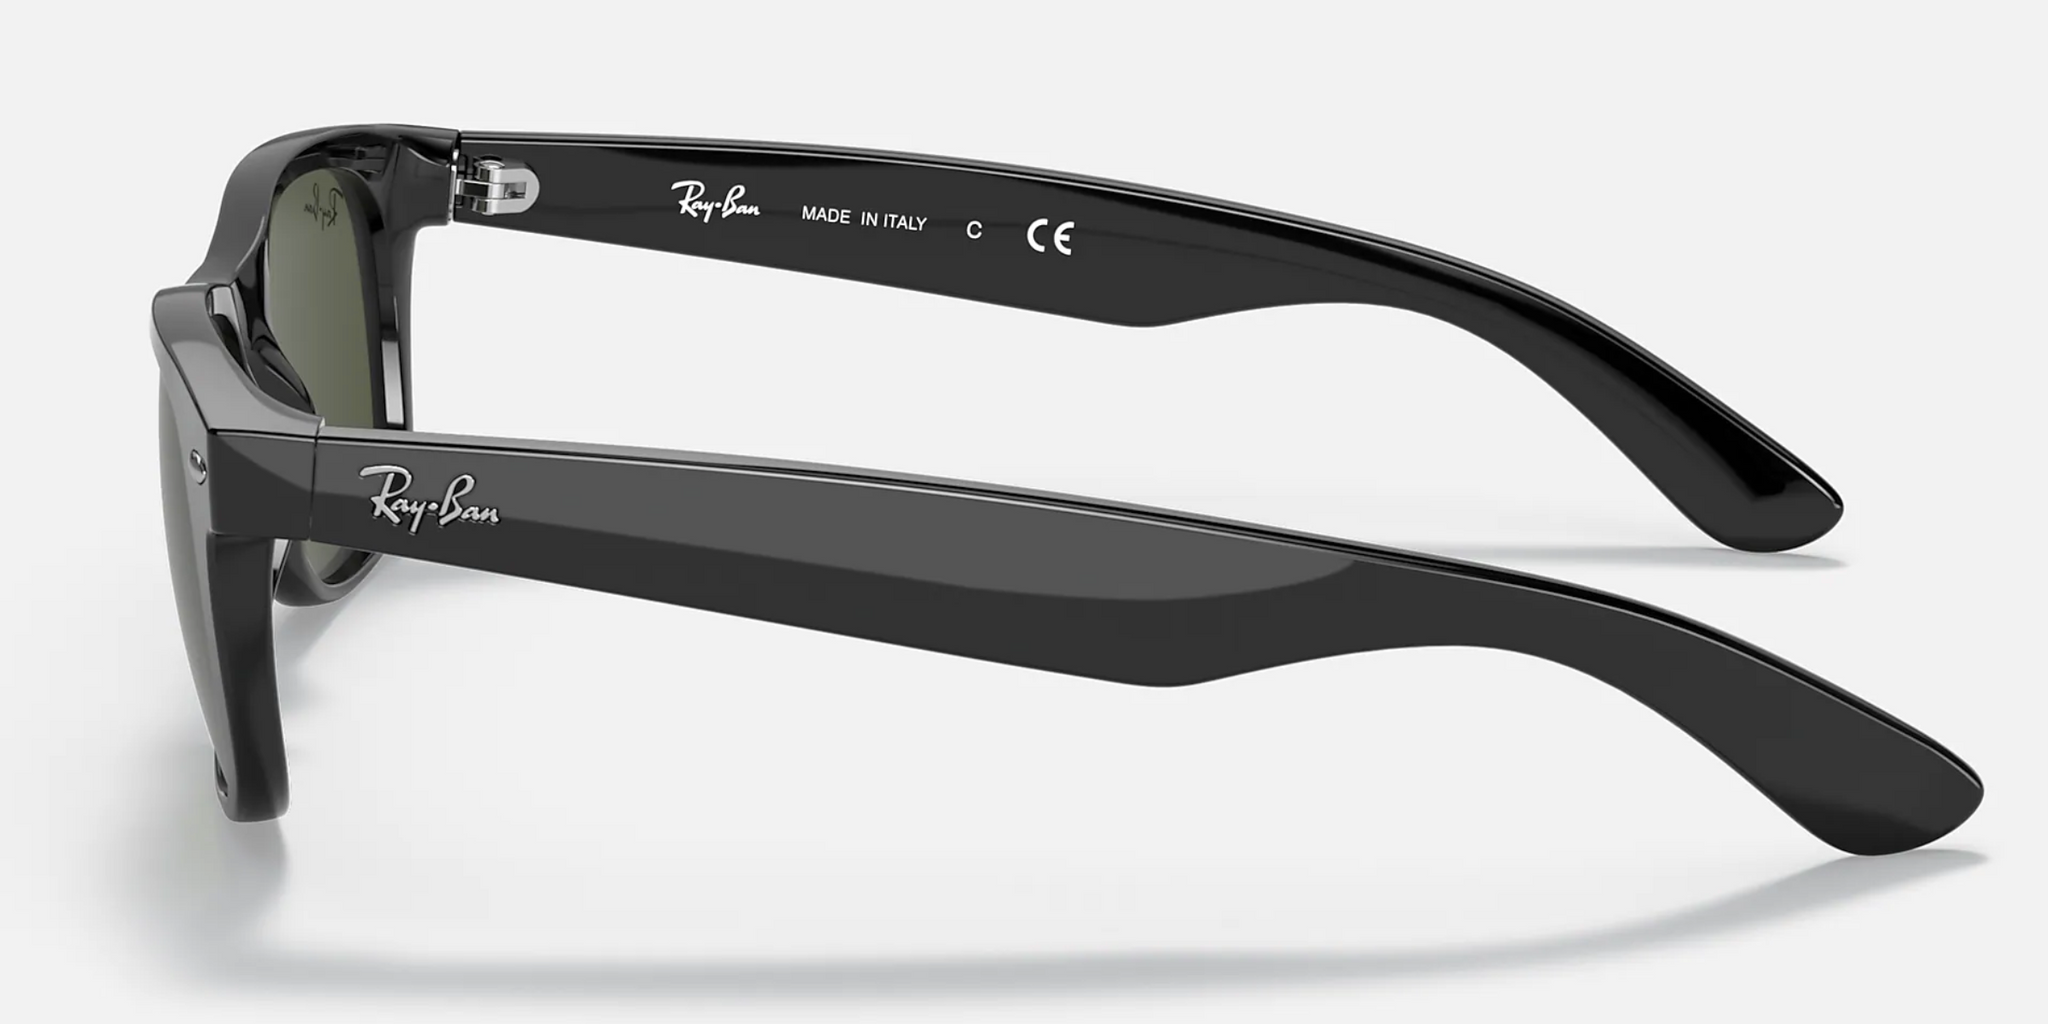 Raffinaderi nul mangel Ray-Ban New Wayfarer Black Classic Sunglasses RB2132 - Flight Sunglasses